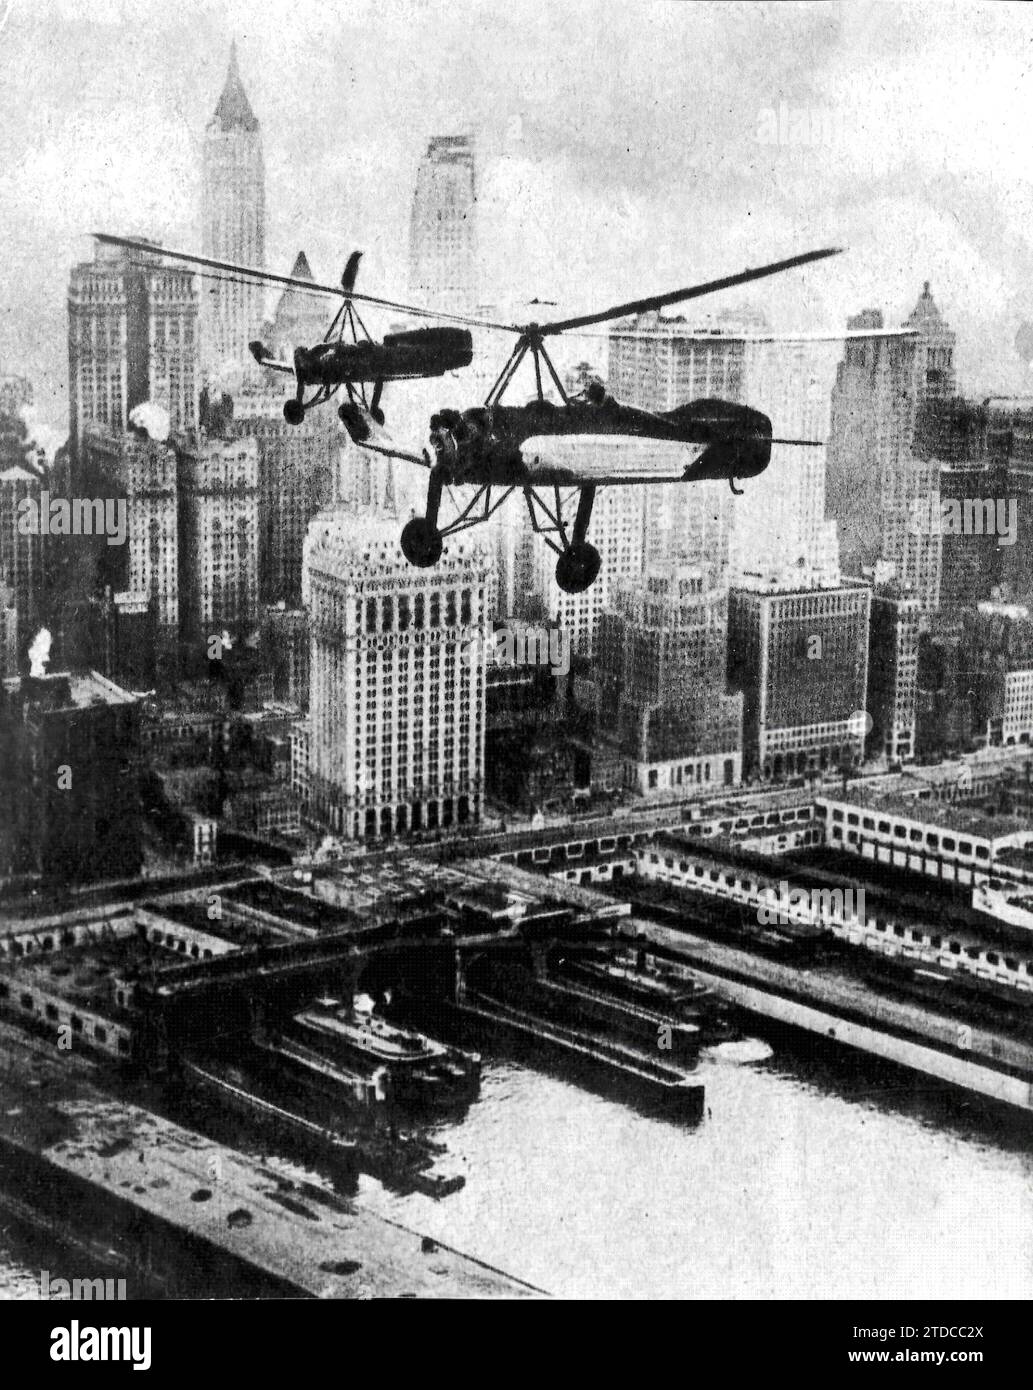 12/31/1929. Juan de La Cierva's autogyro flying over New York. Credit: Album / Archivo ABC Stock Photo